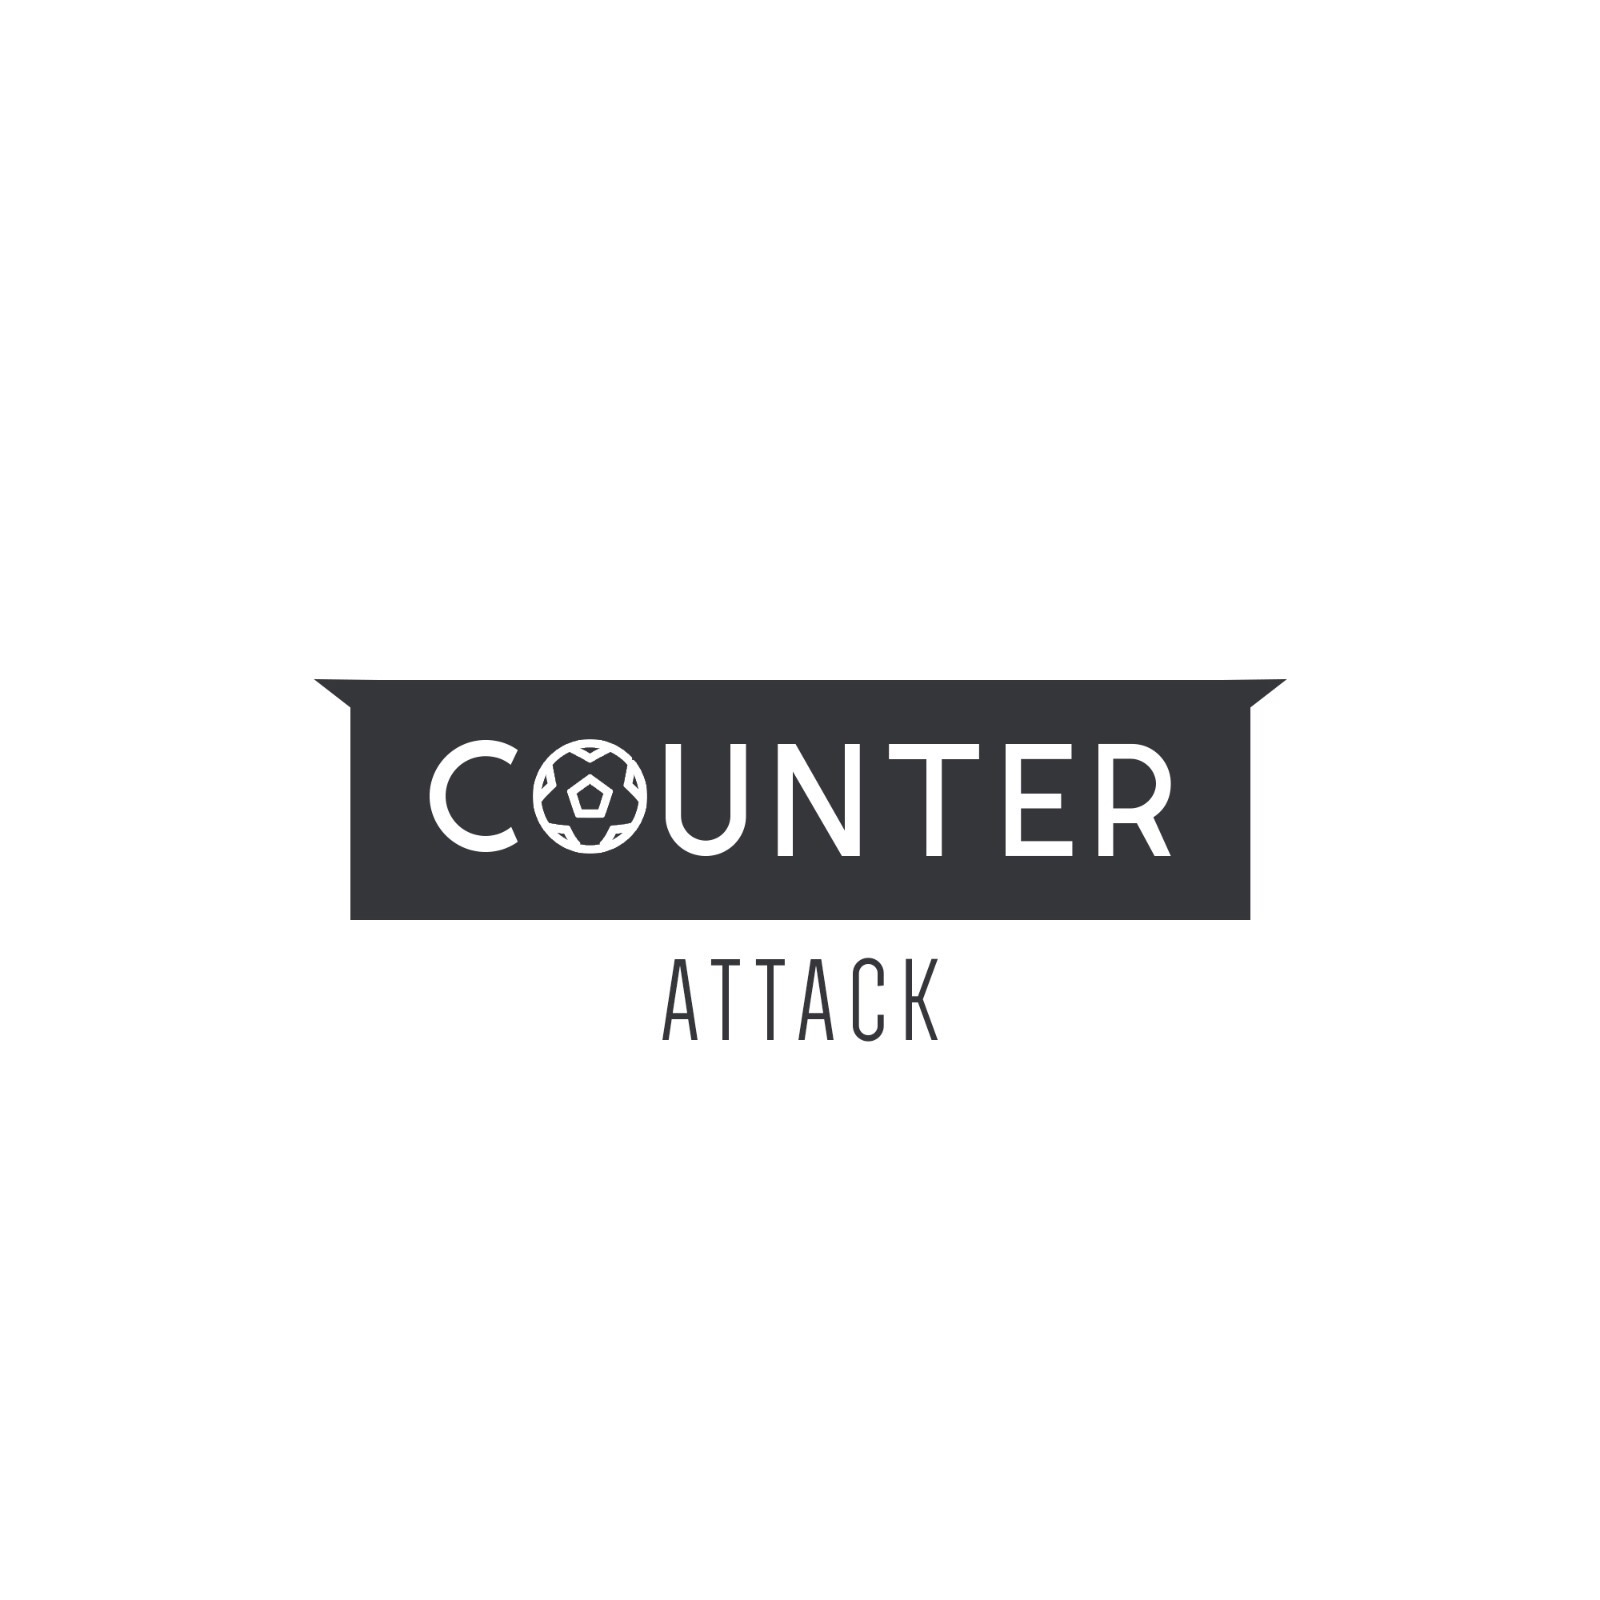 Counter Attack - Episode 109 - Anton Ferdinand at Counter Attack Live